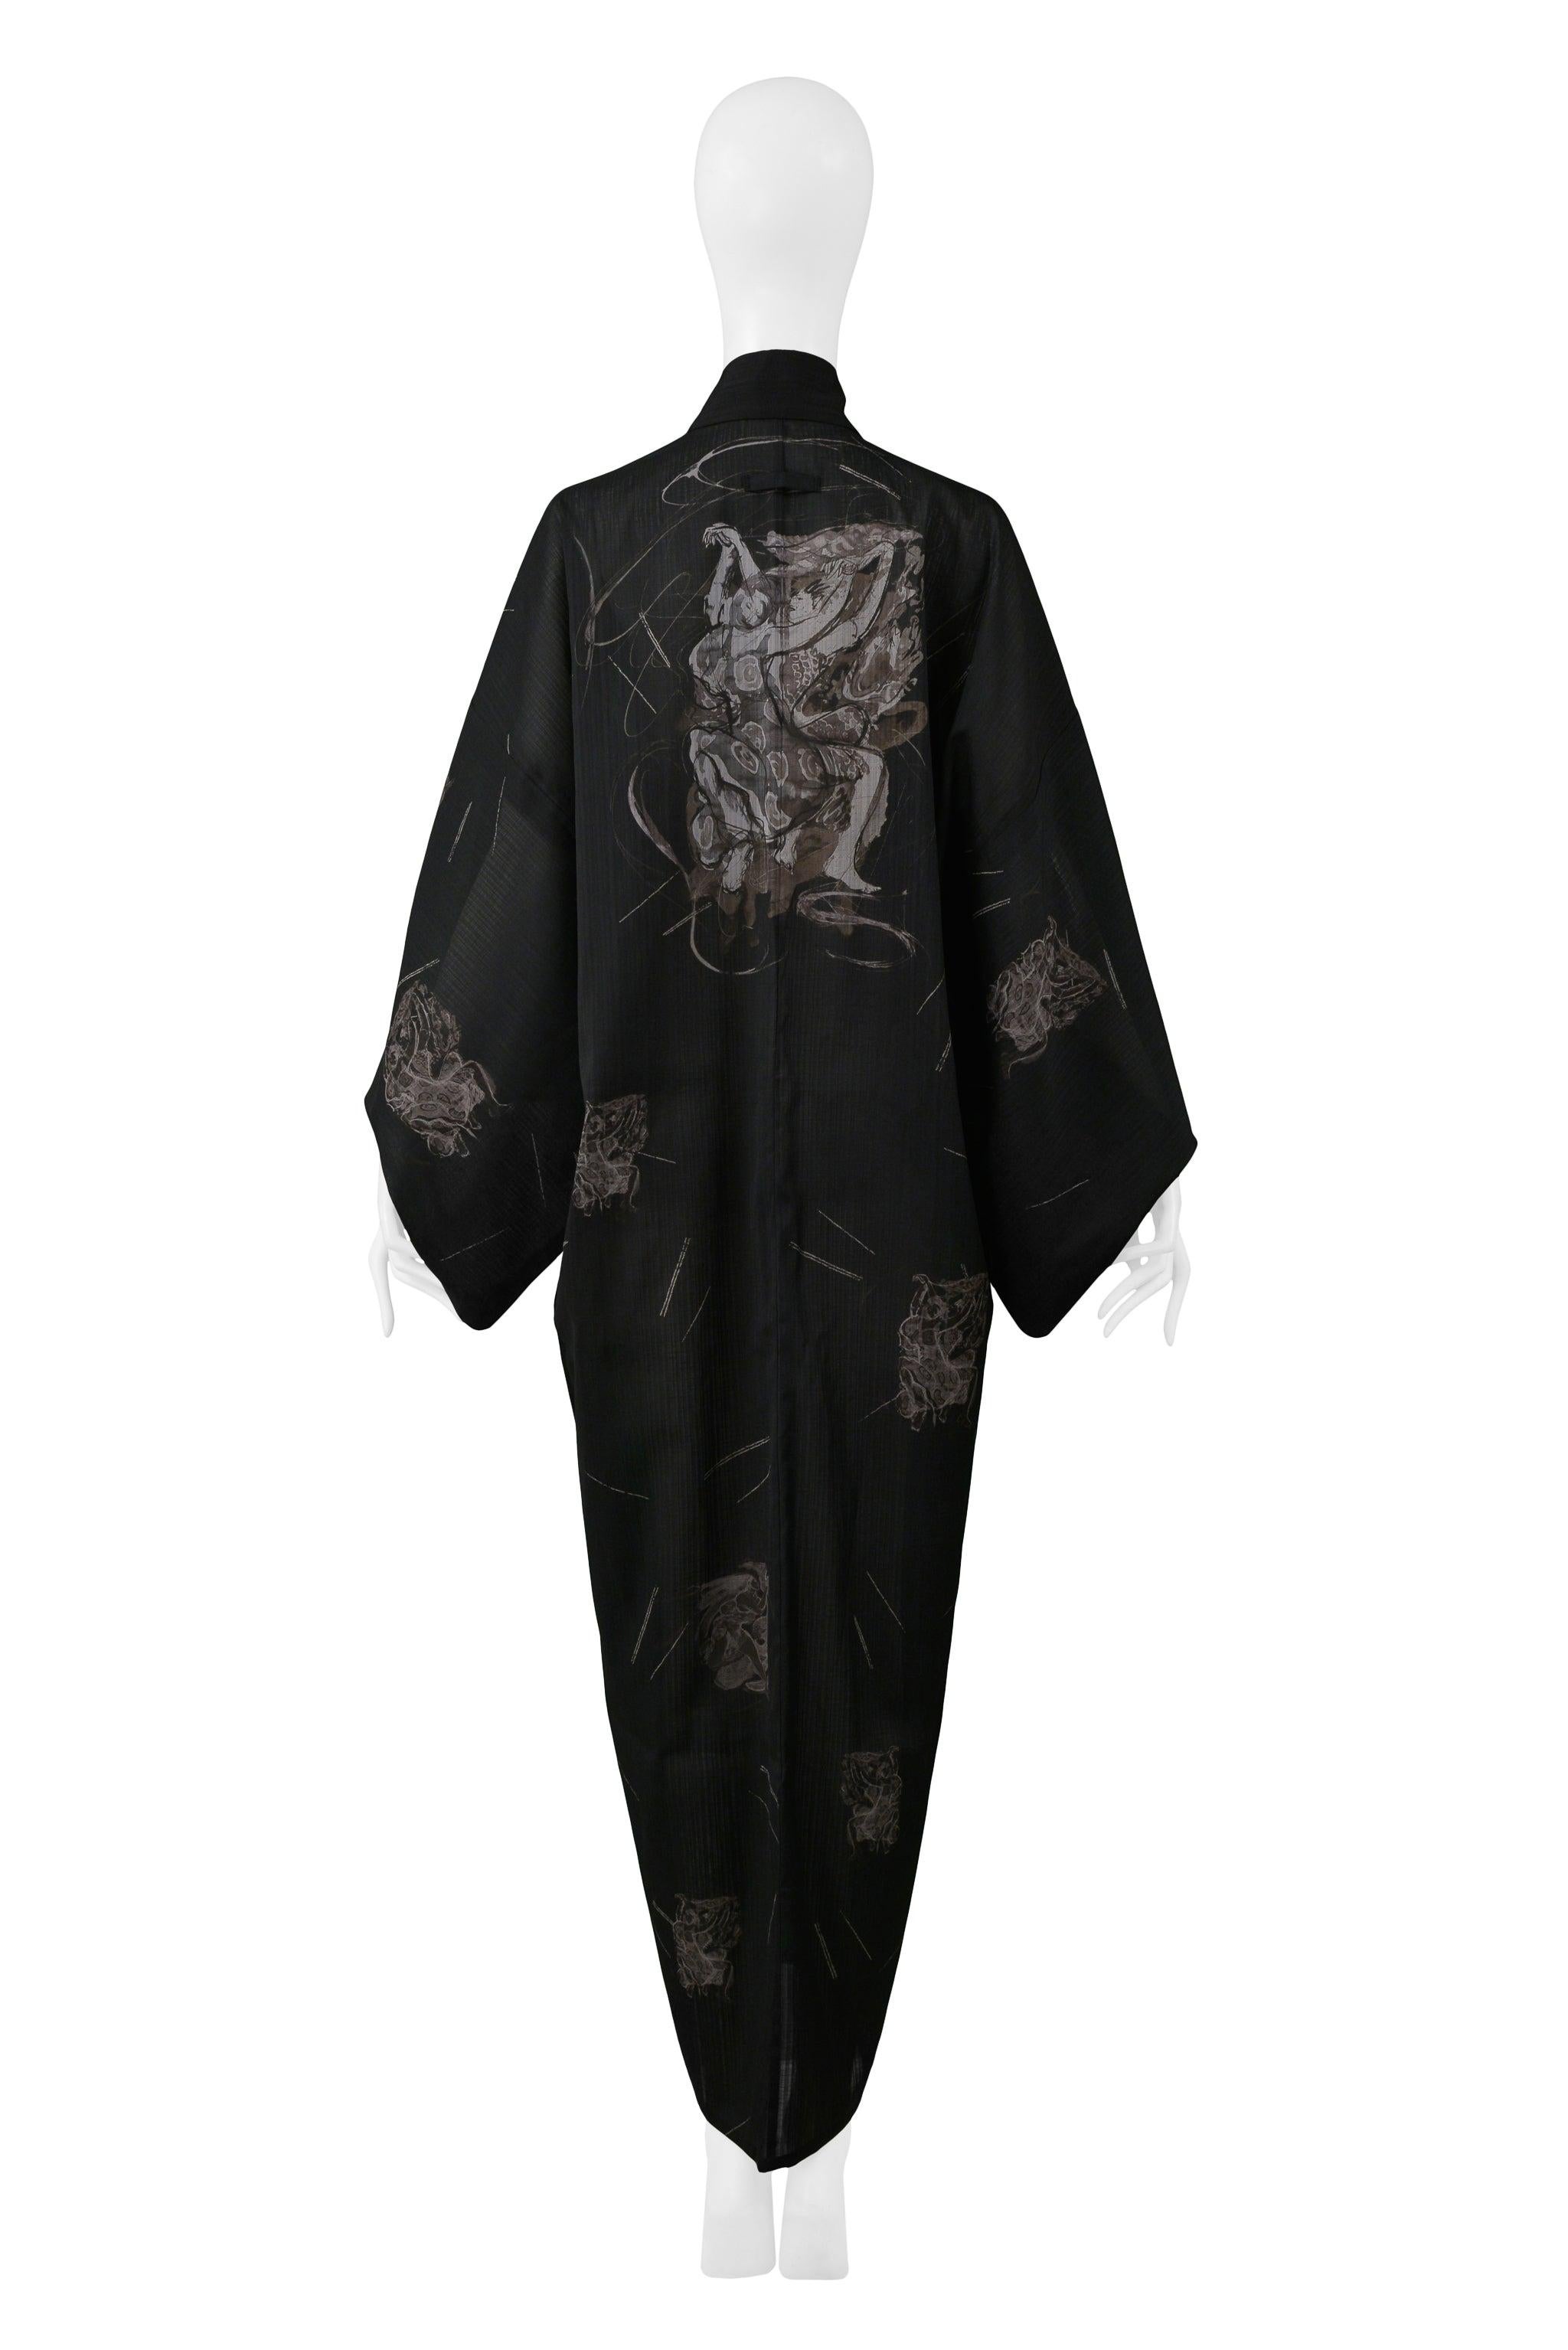 Jean Paul Gaultier Black & Gray Dancers Kimono Robe 2002 For Sale 4